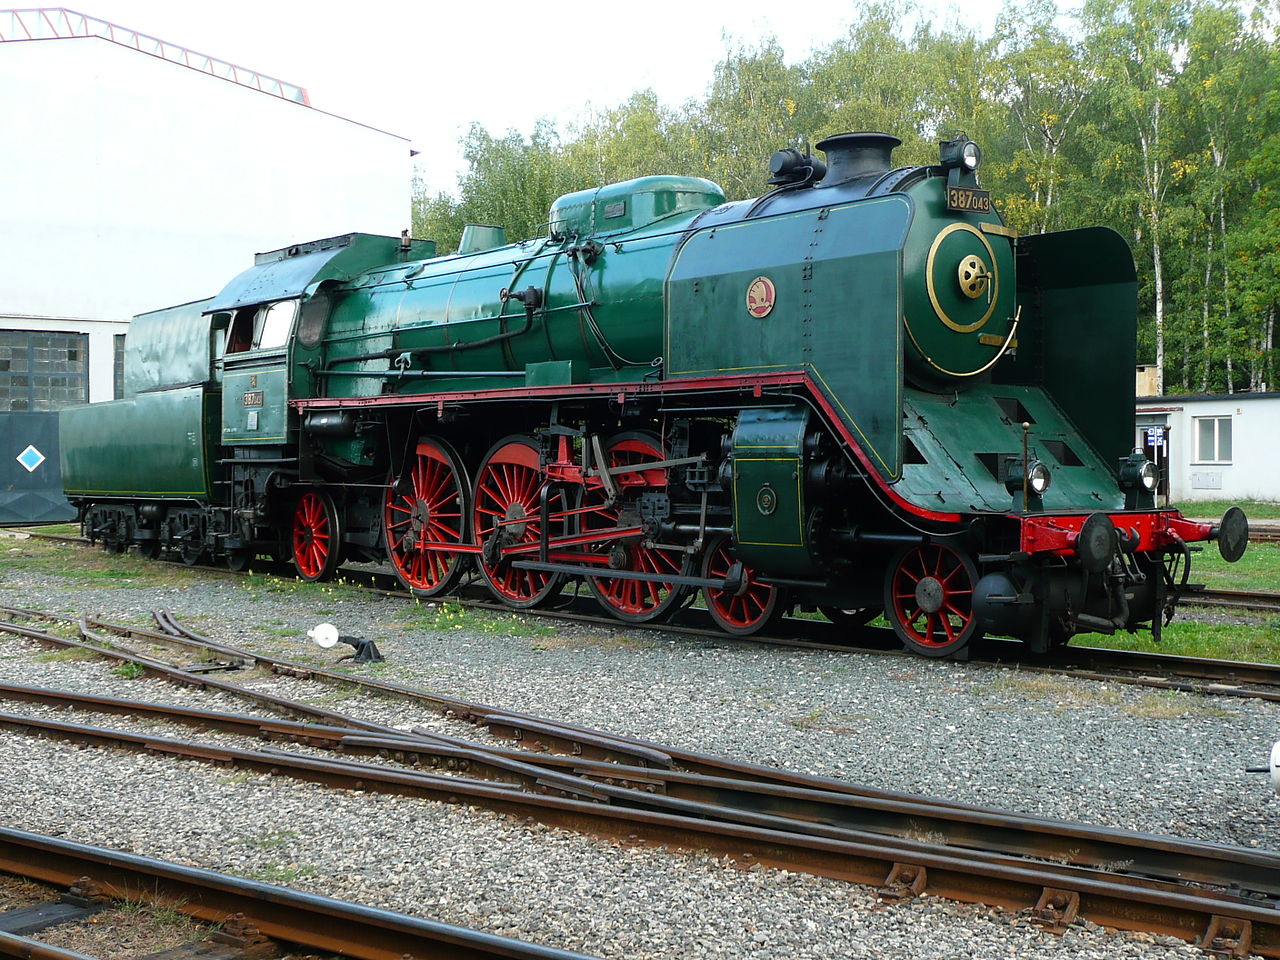 Muzejní lokomotiva 387.043 "Mikádo". Autor: Rainerhaufe, CC BY-SA 3.0, https://commons.wikimedia.org/w/index.php?curid=6969467